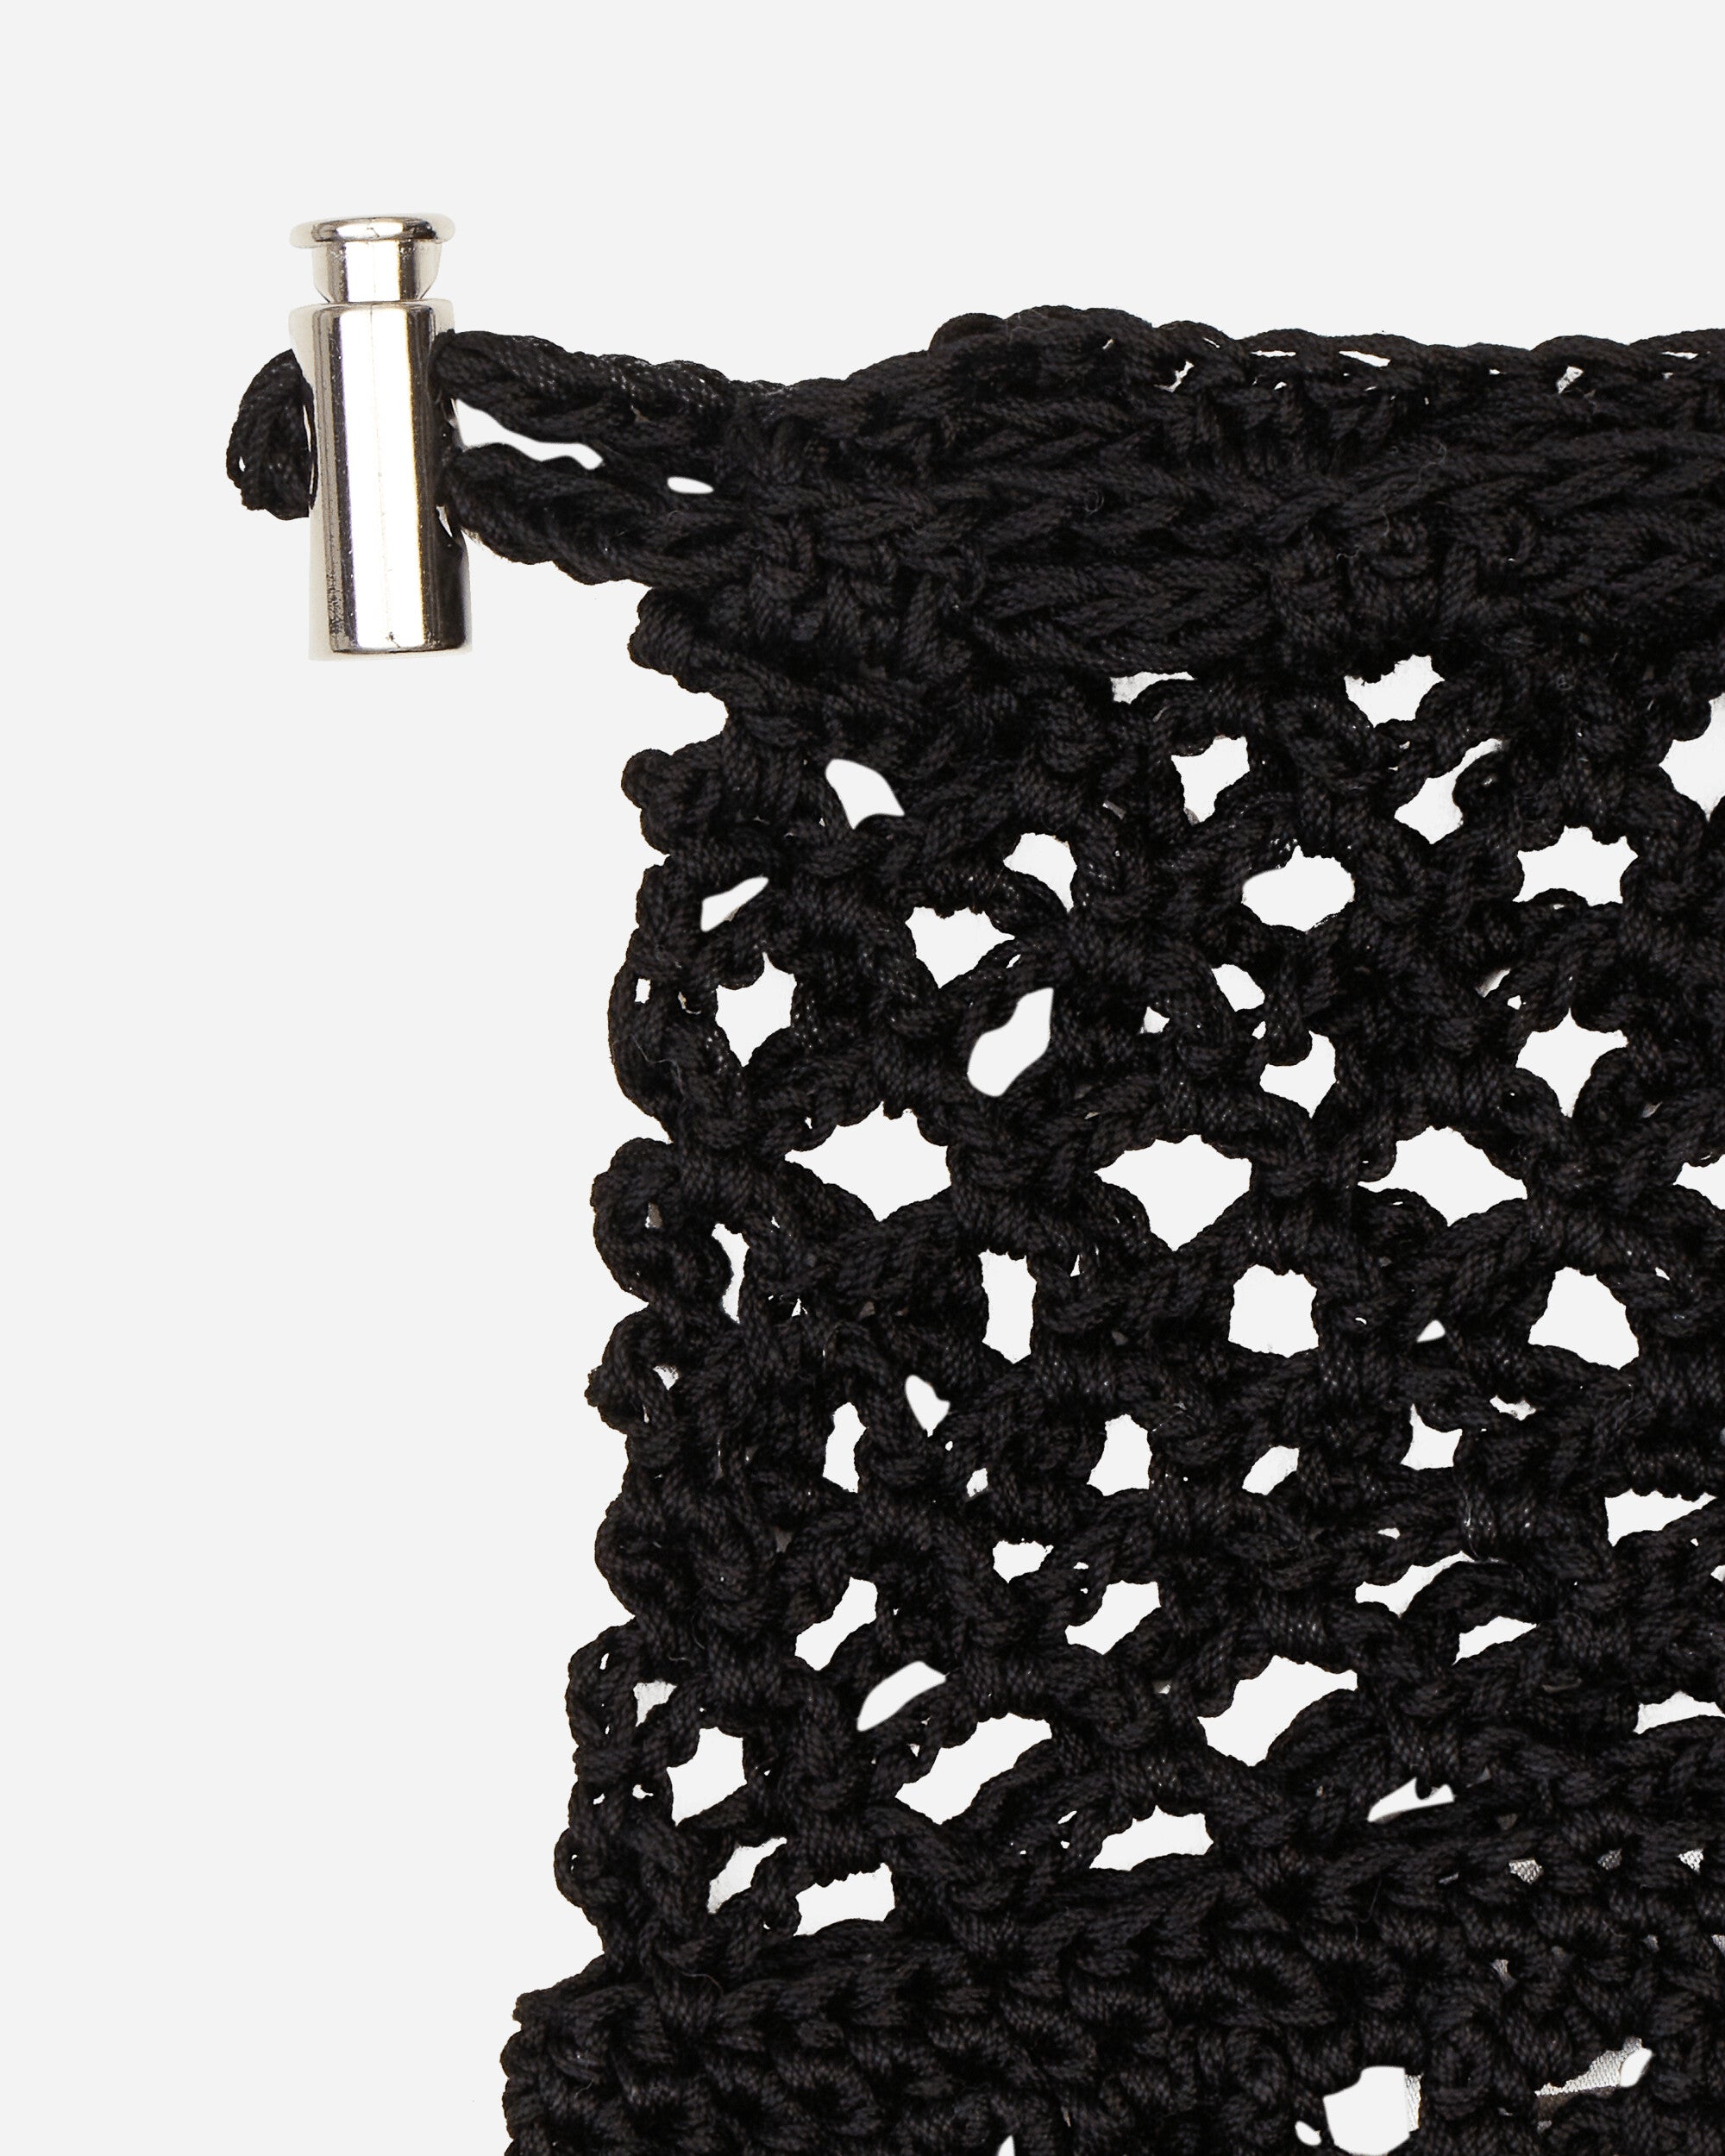 SSU Wmns Crochet Mesh Stitch Crossbody Bag Black Bags and Backpacks Shoulder Bags SSUCROSSBODYBAG BLACK